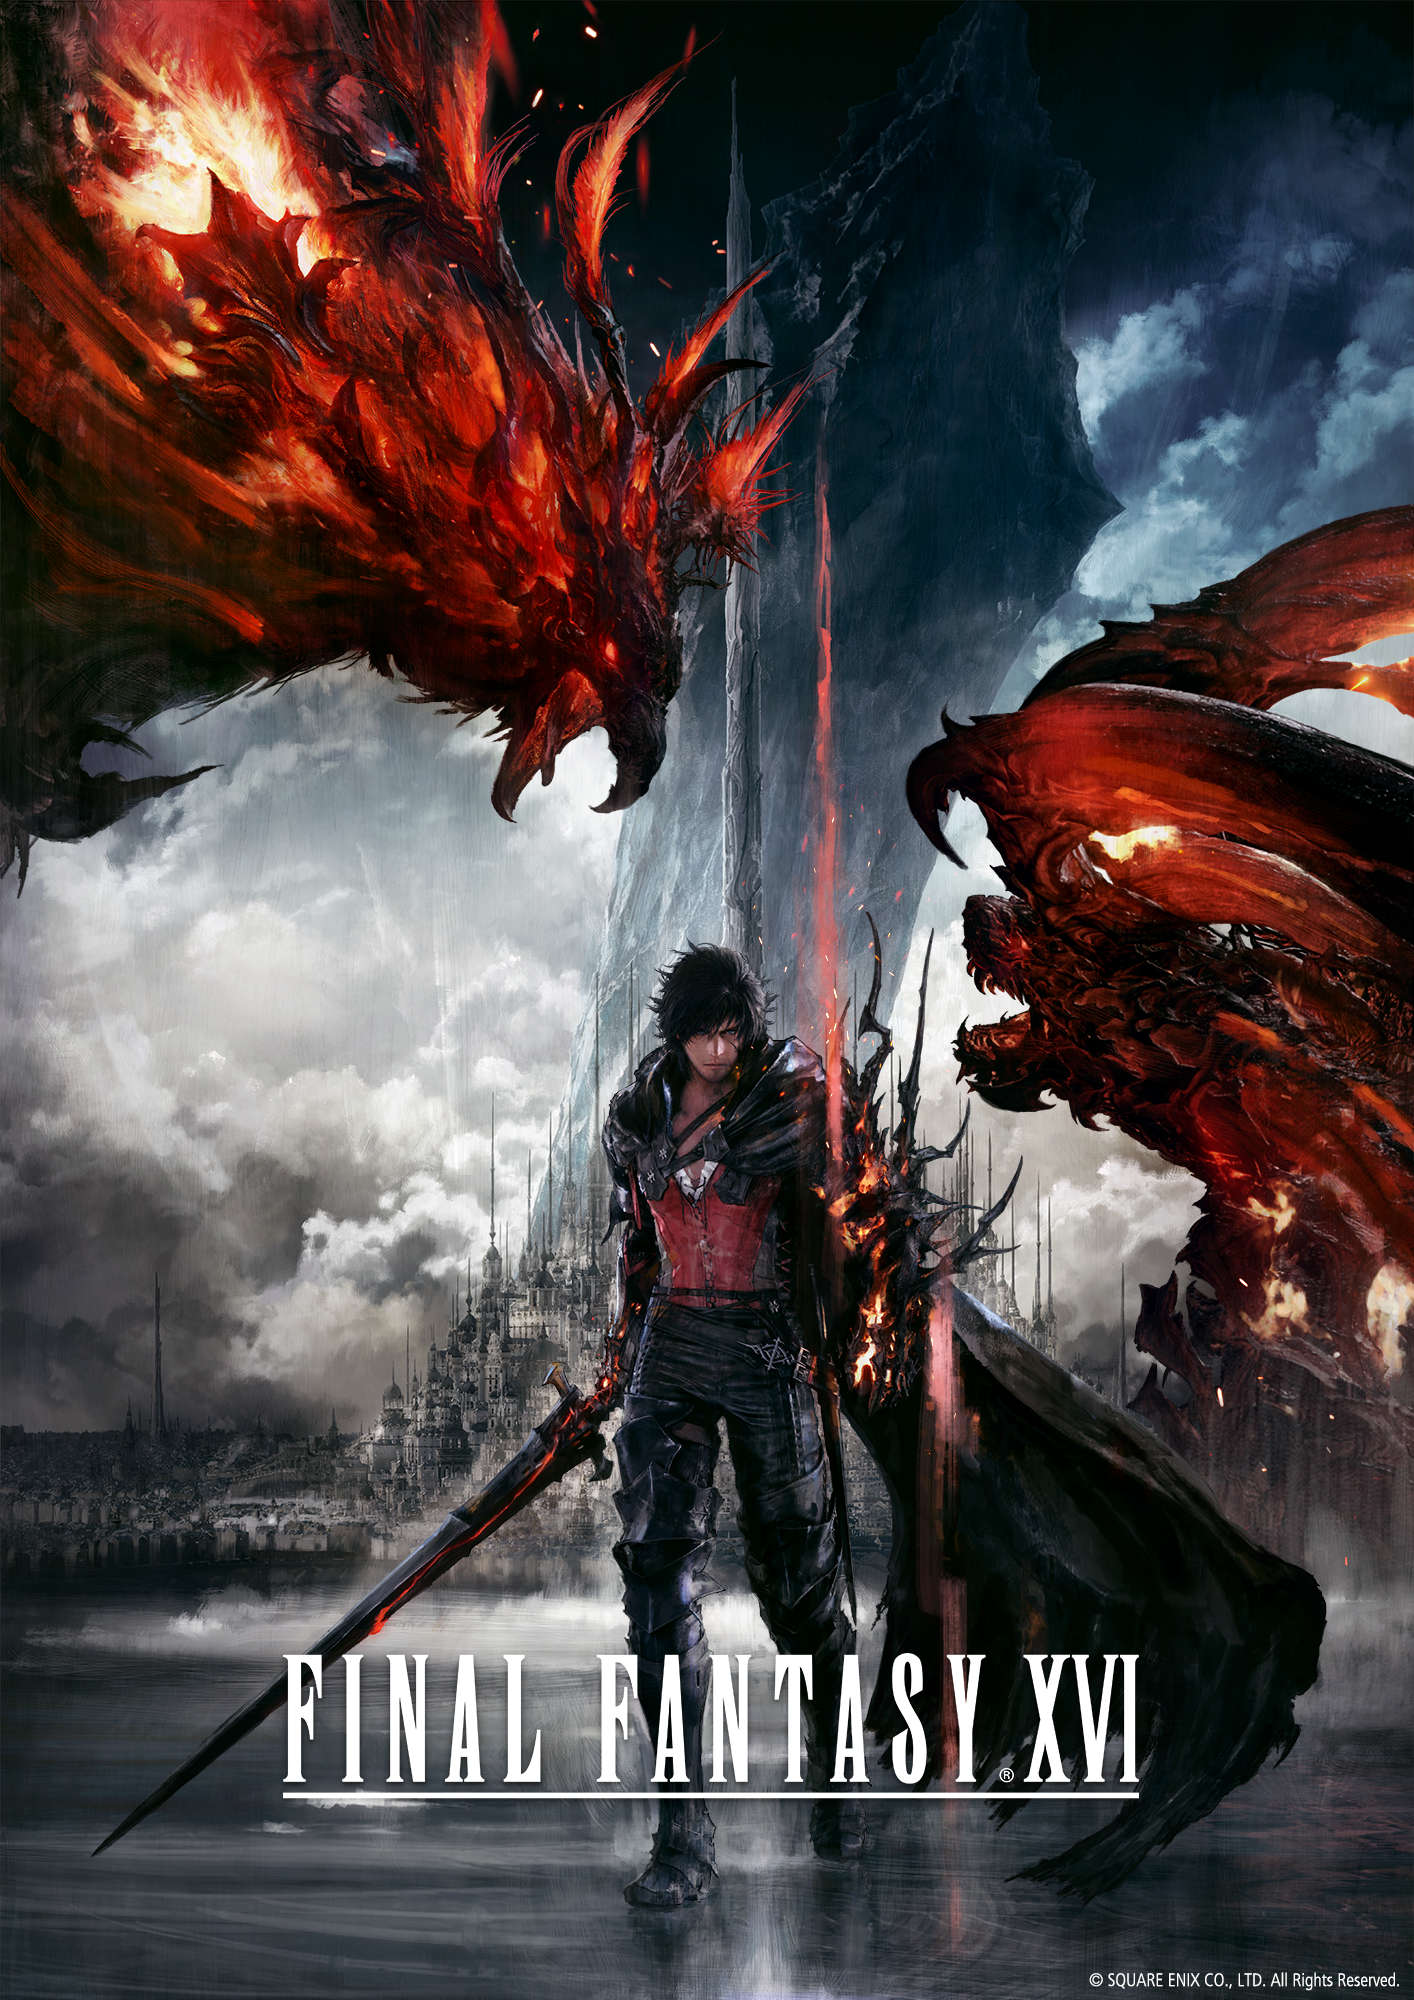 Final Fantasy XVI Website Details World, Main Characters – RPGamer